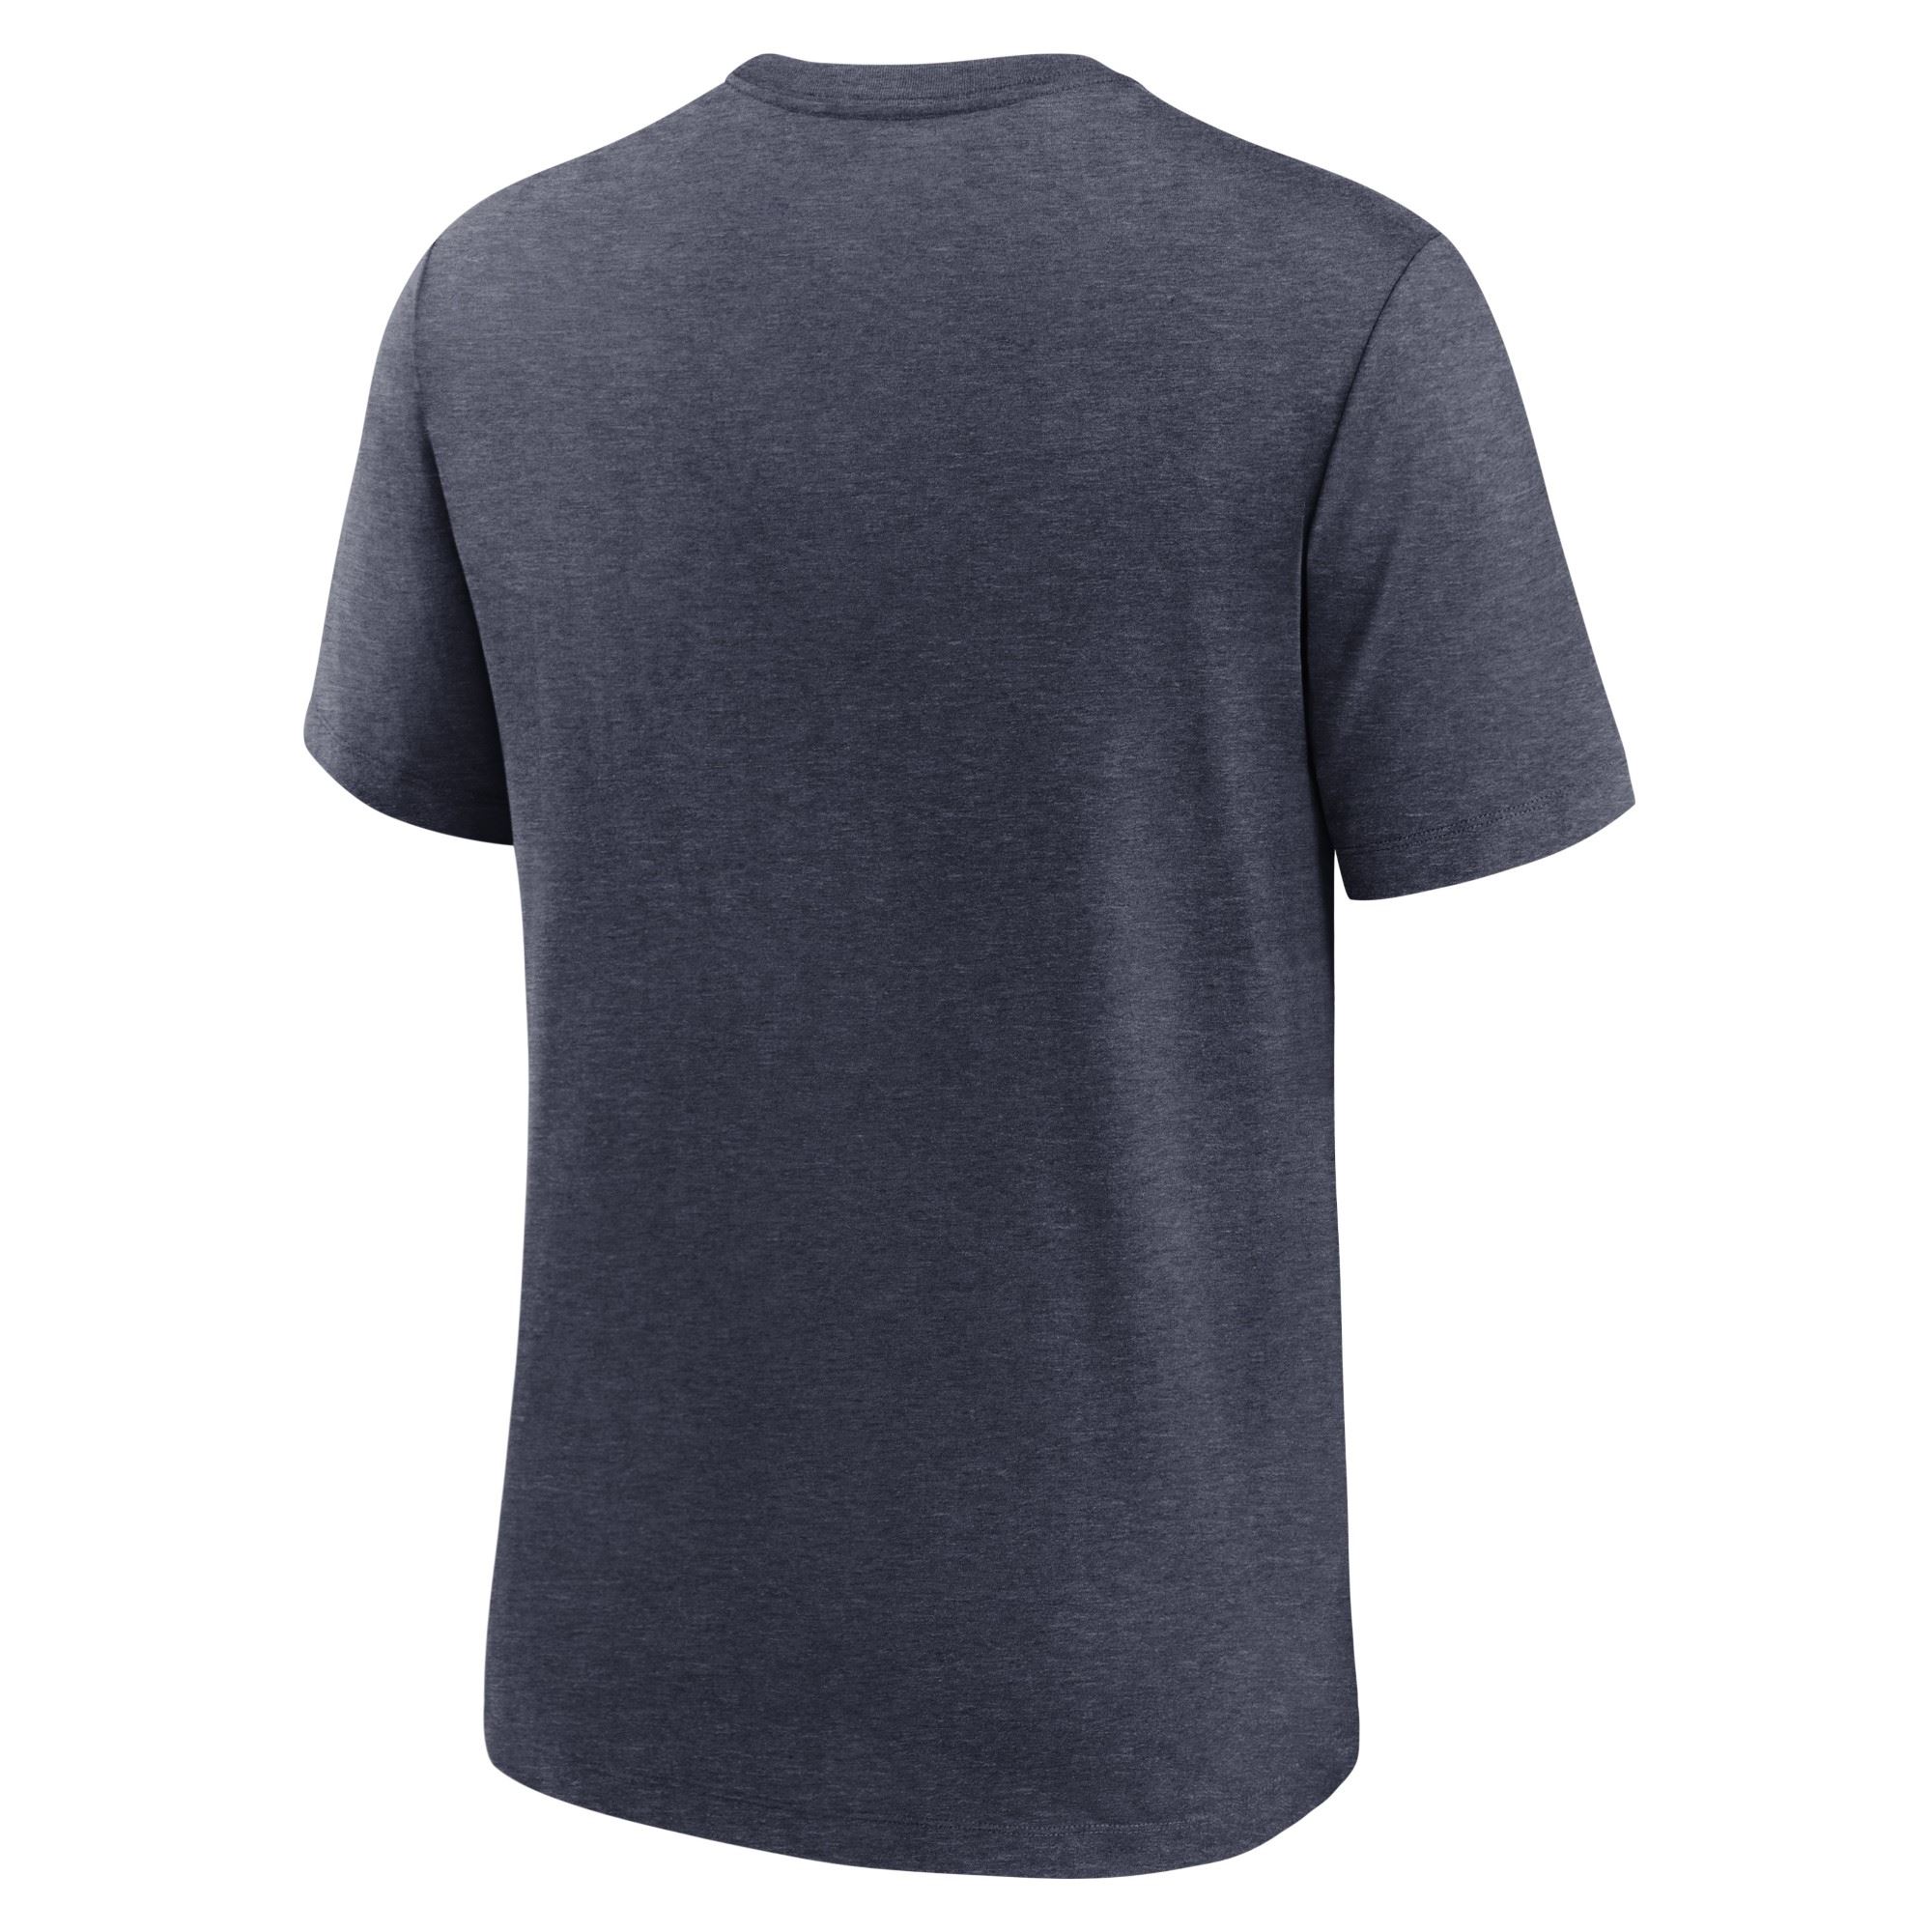 Seattle Seahawks NFL Triblend Team Name Fashion Navy Heather T-Shirt Nike